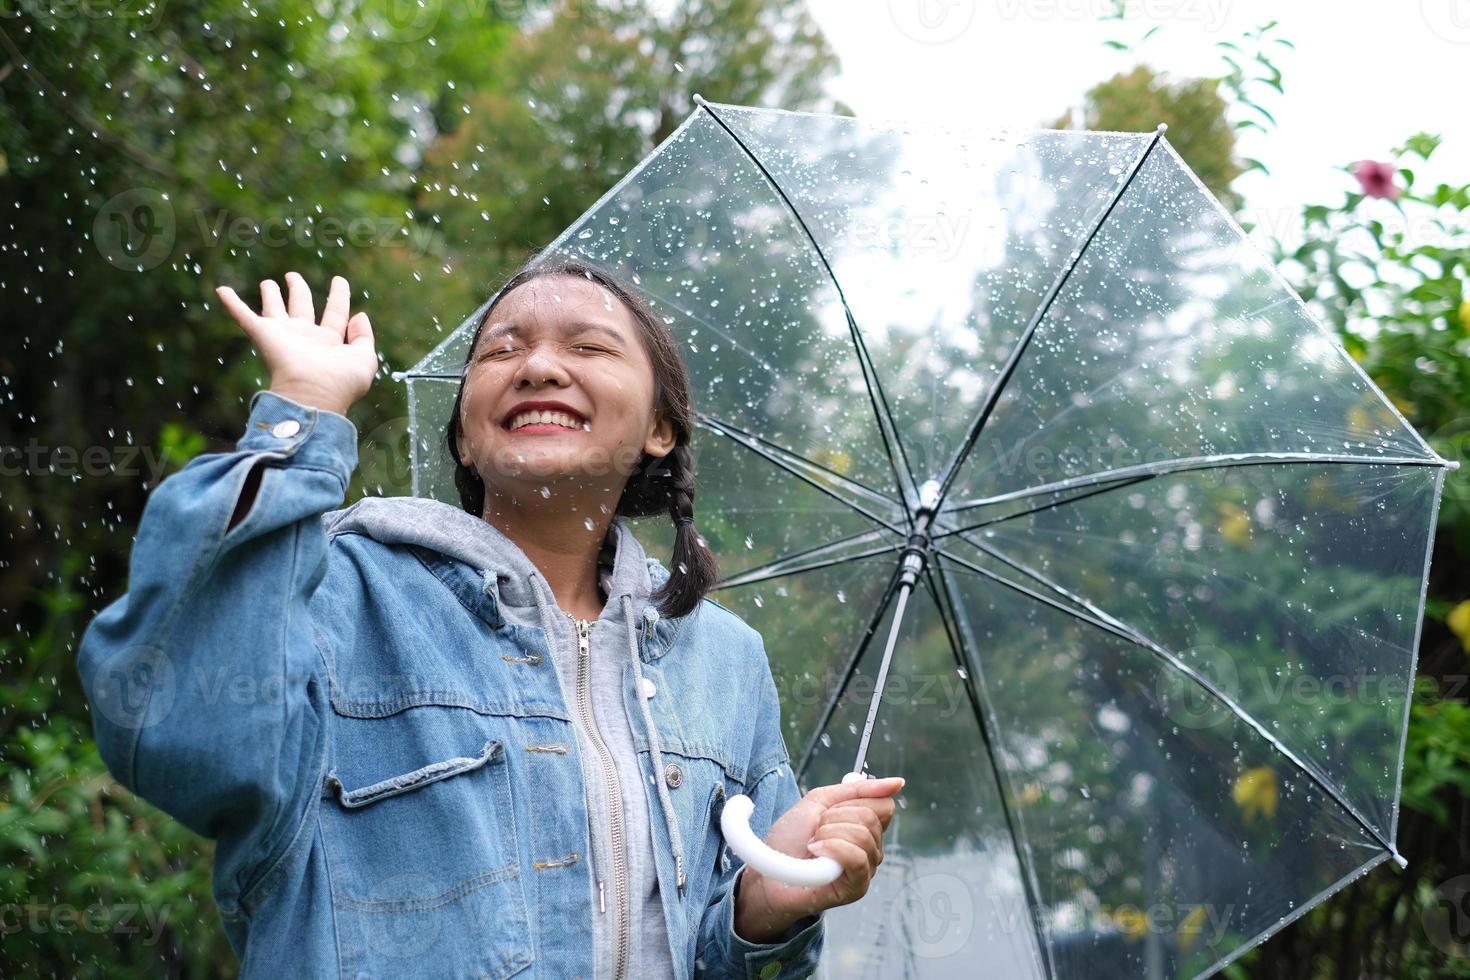 sorria jovem se divertindo no chuvoso. foto